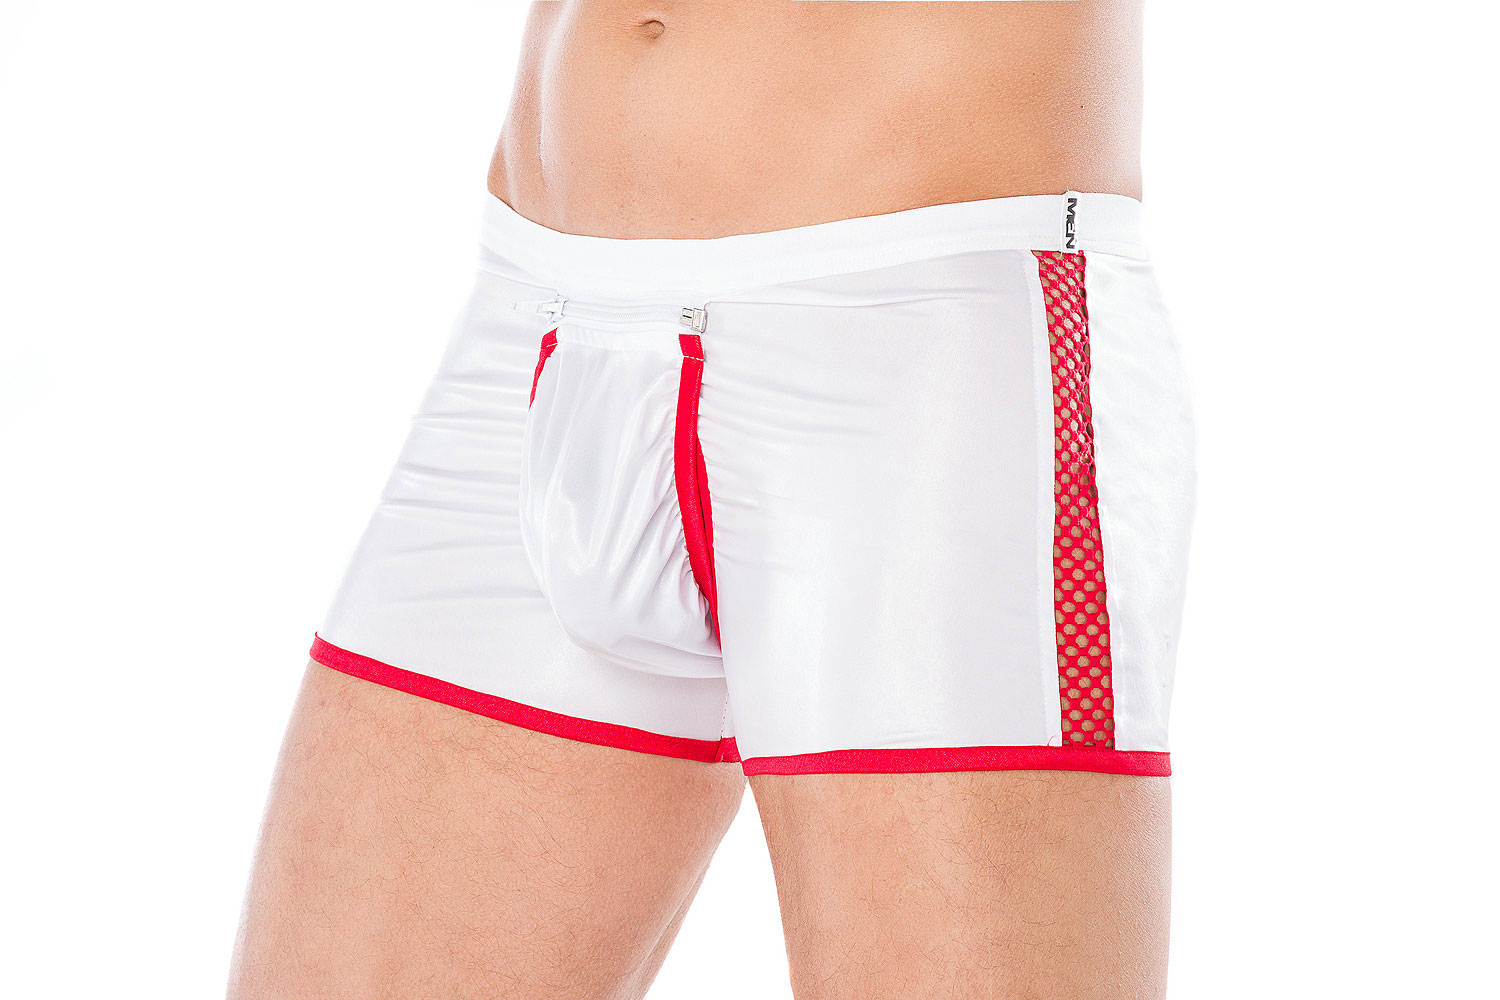 Herren Kostüm Set Weiß Doktor Wetlook Boxershorts Männer Shorts Hemd  S/M 5 XL 